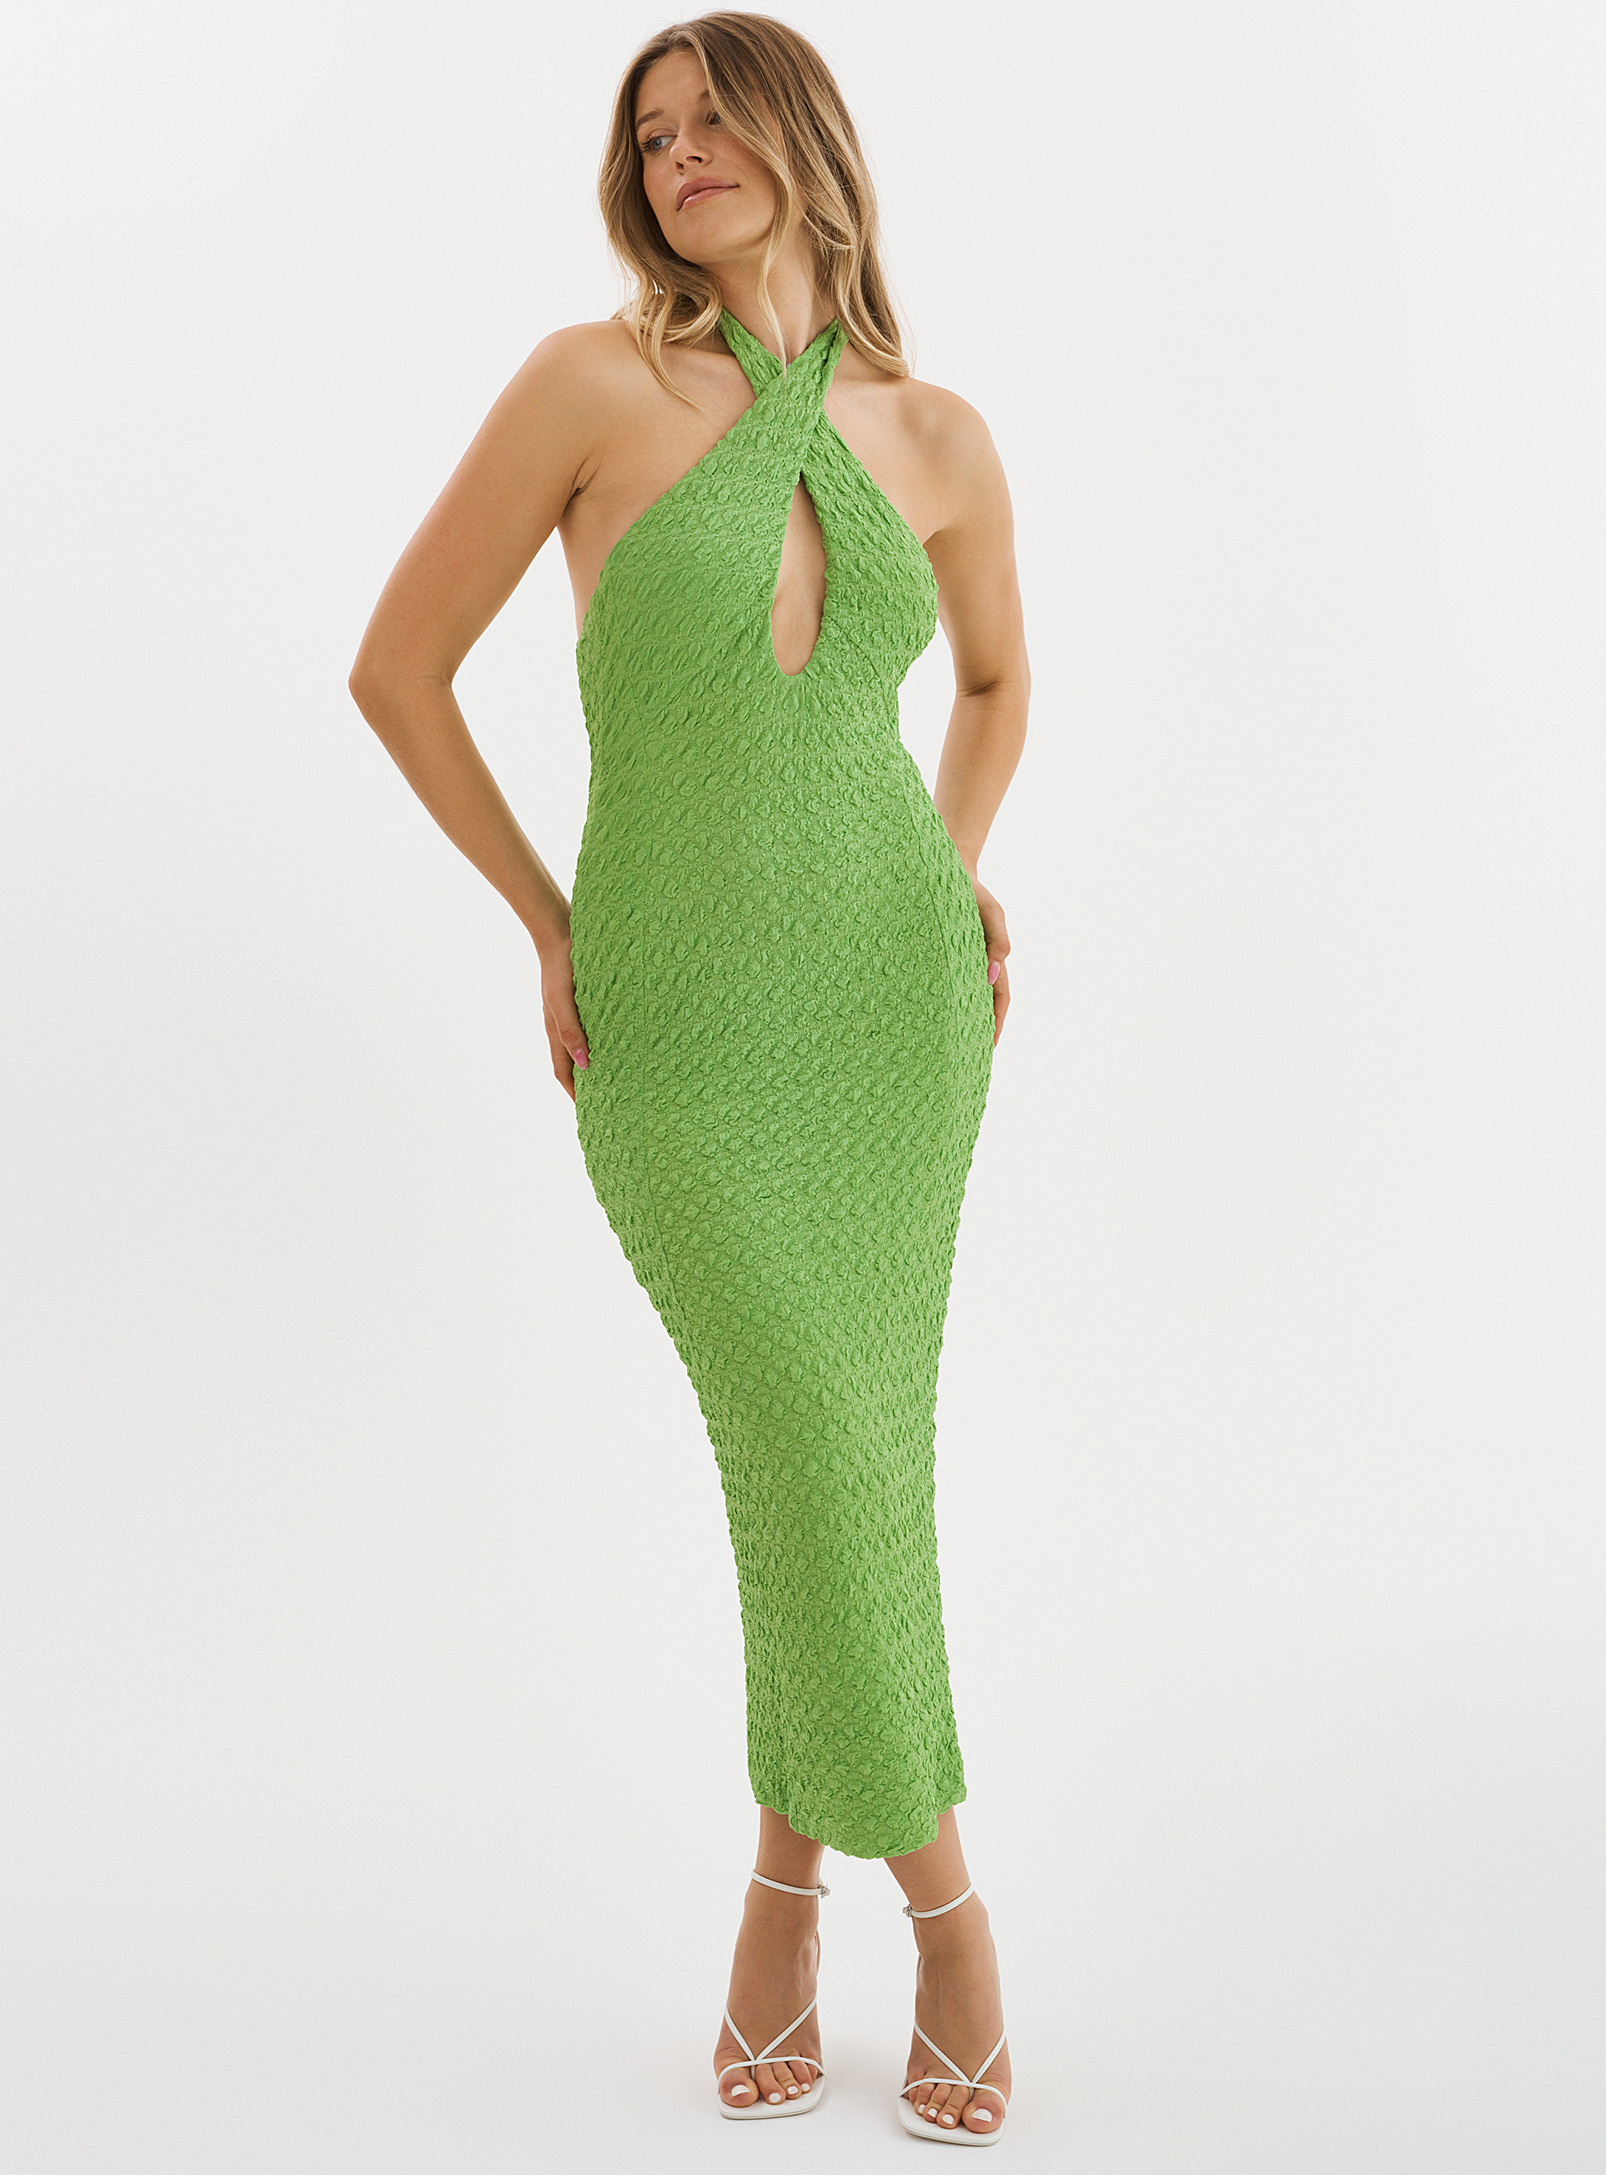 LAMARQUE - La longue robe licou texture popcorn Milca